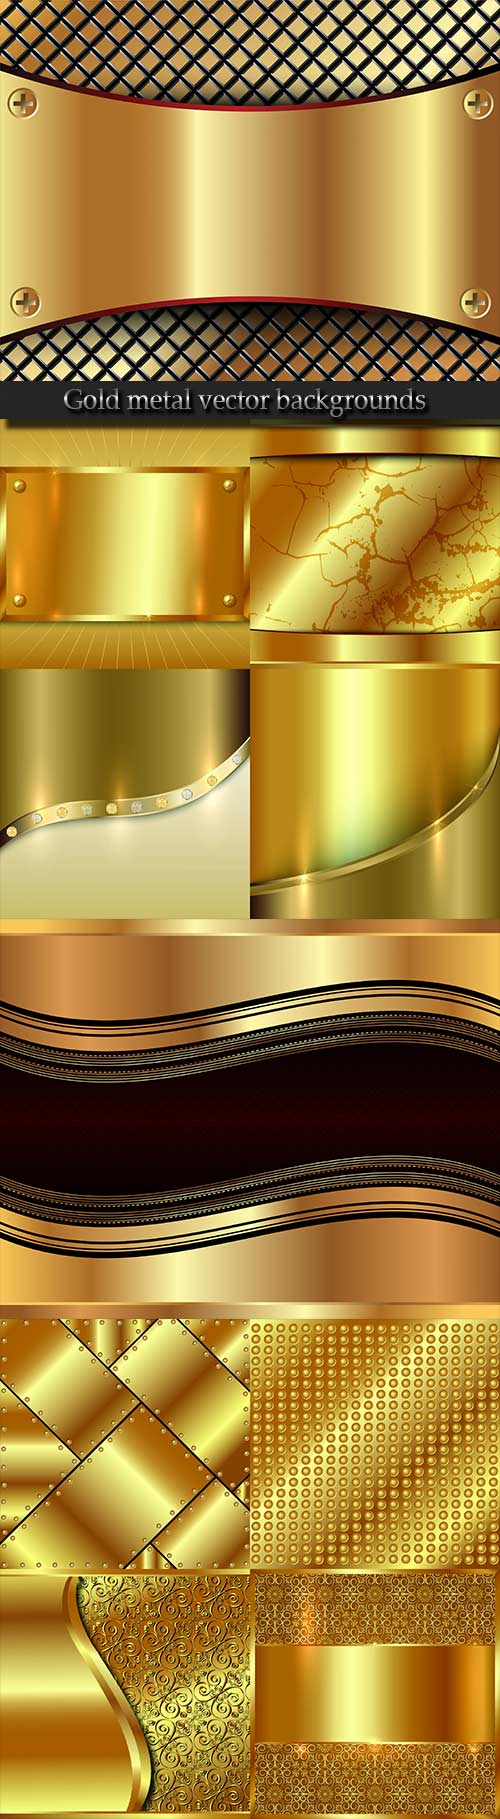 Gold metal vector backgrounds